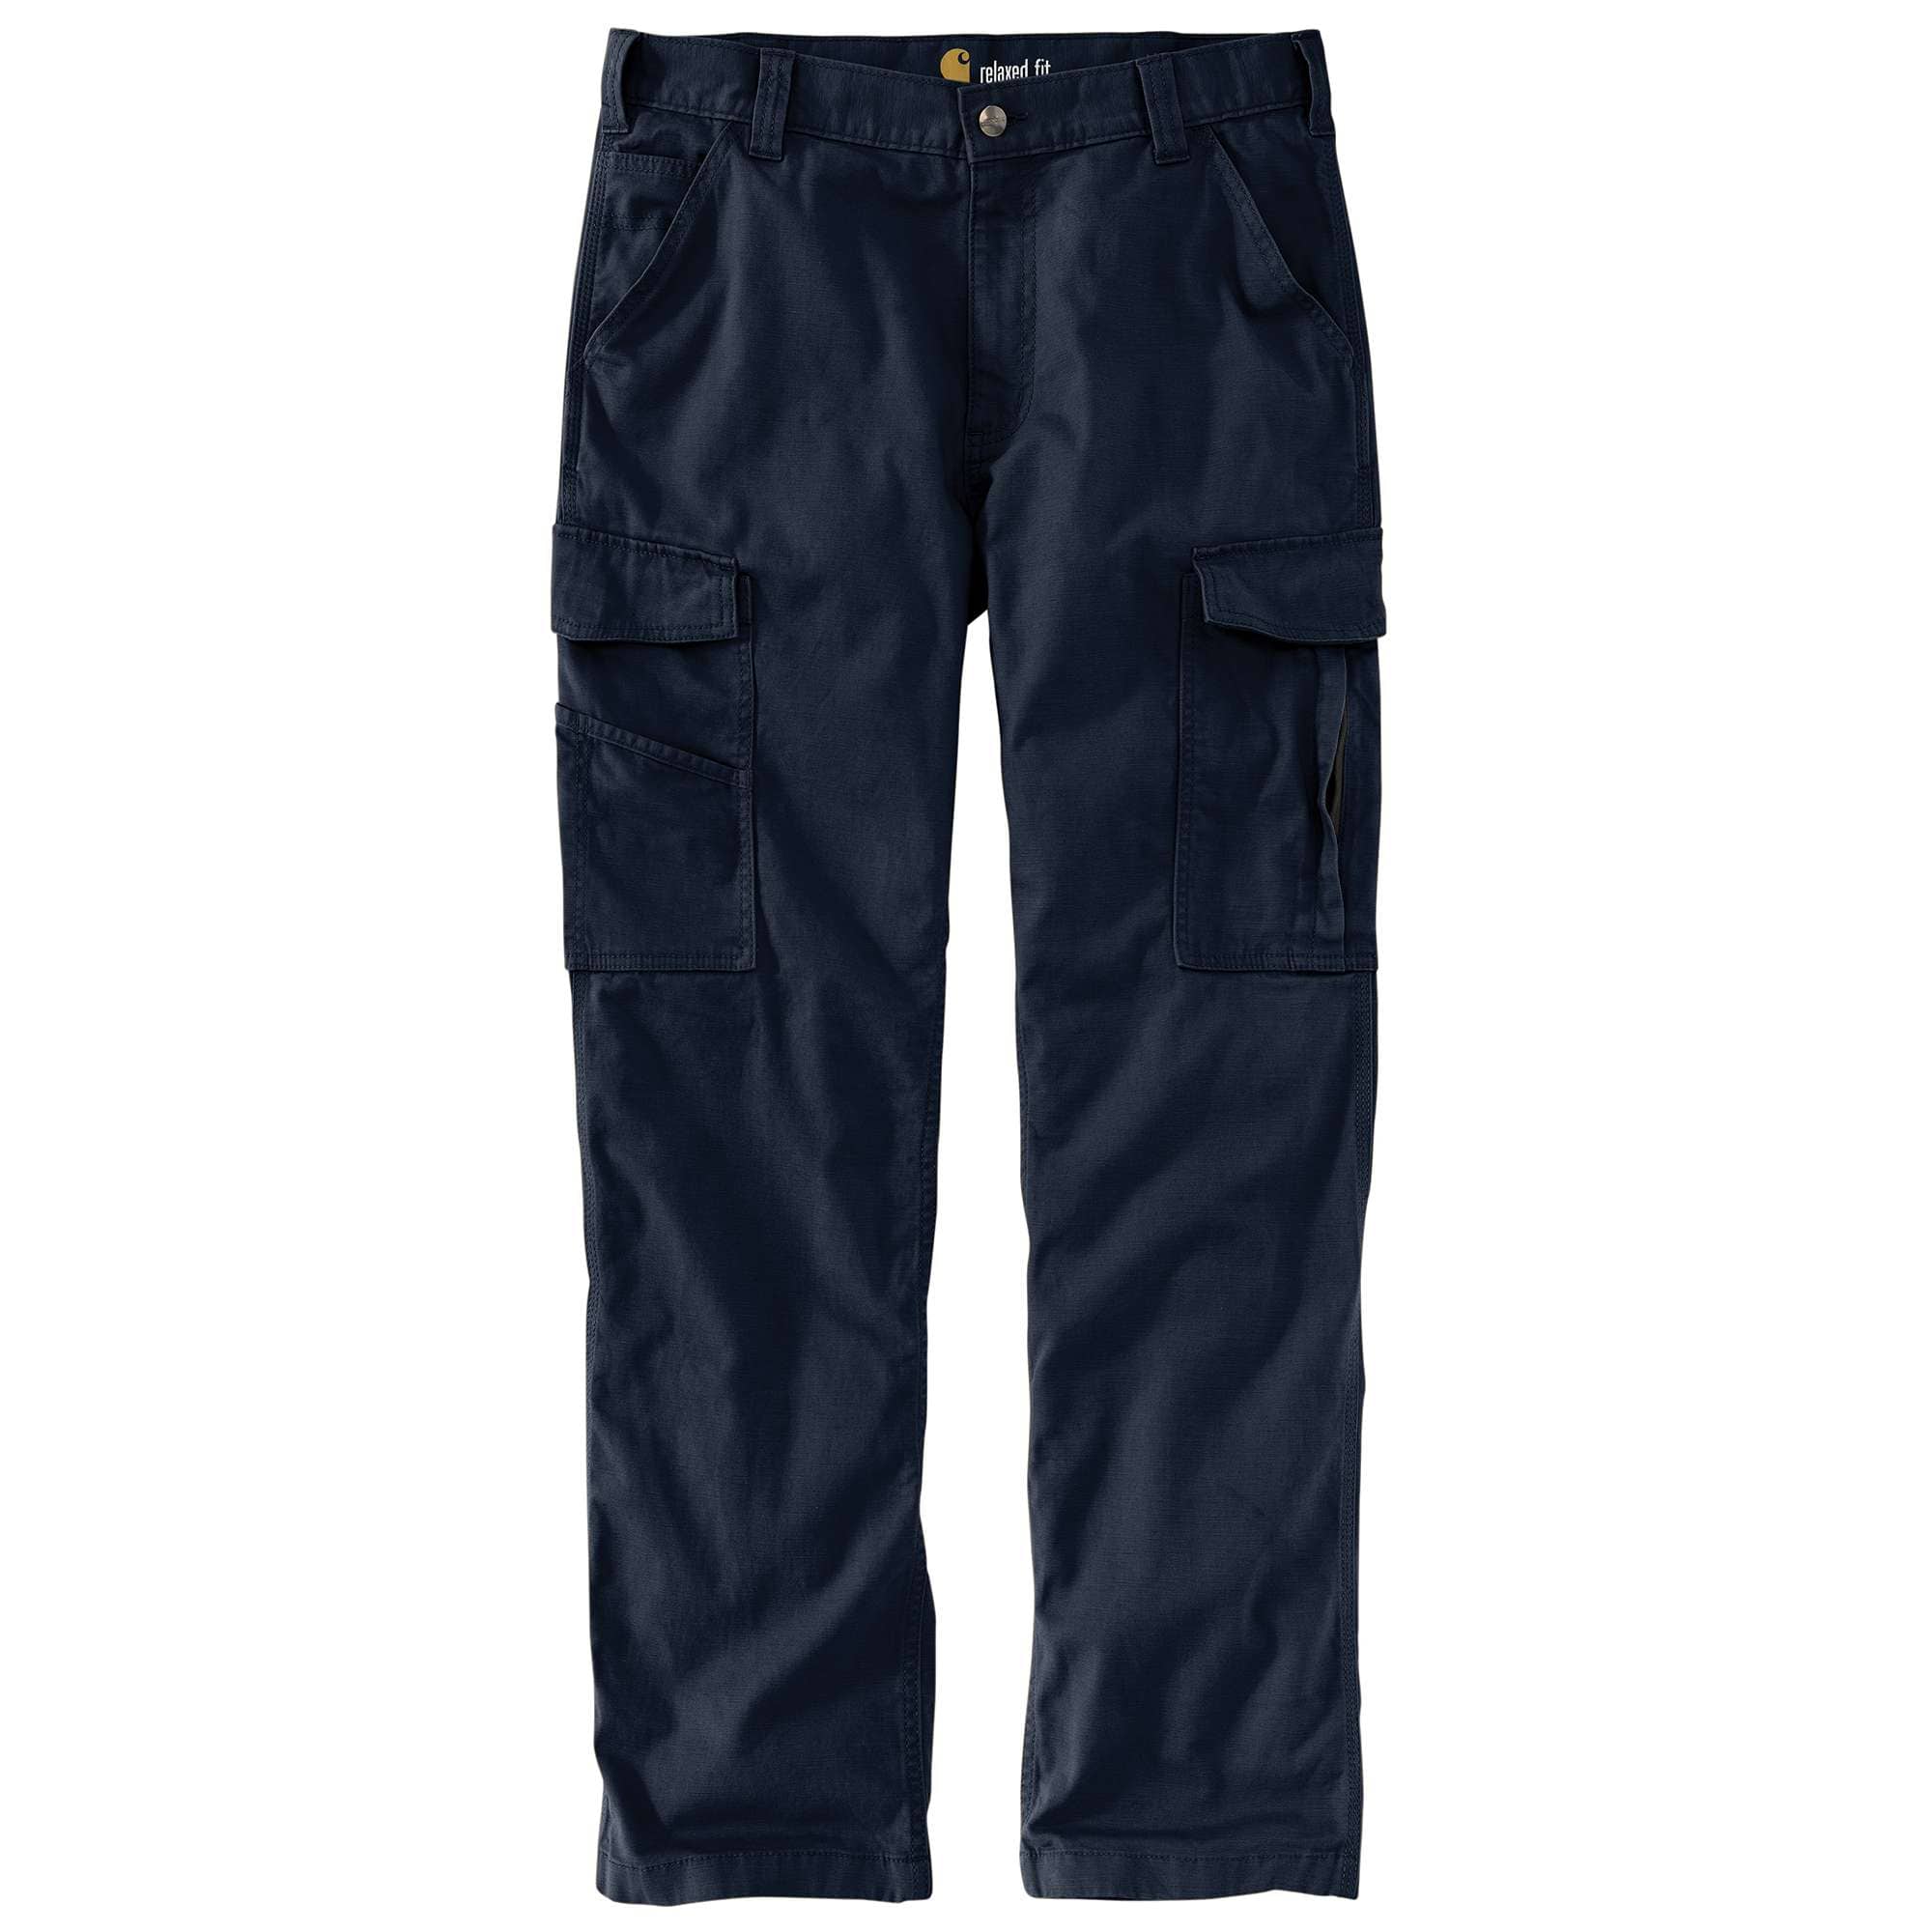 blue cargo work pants